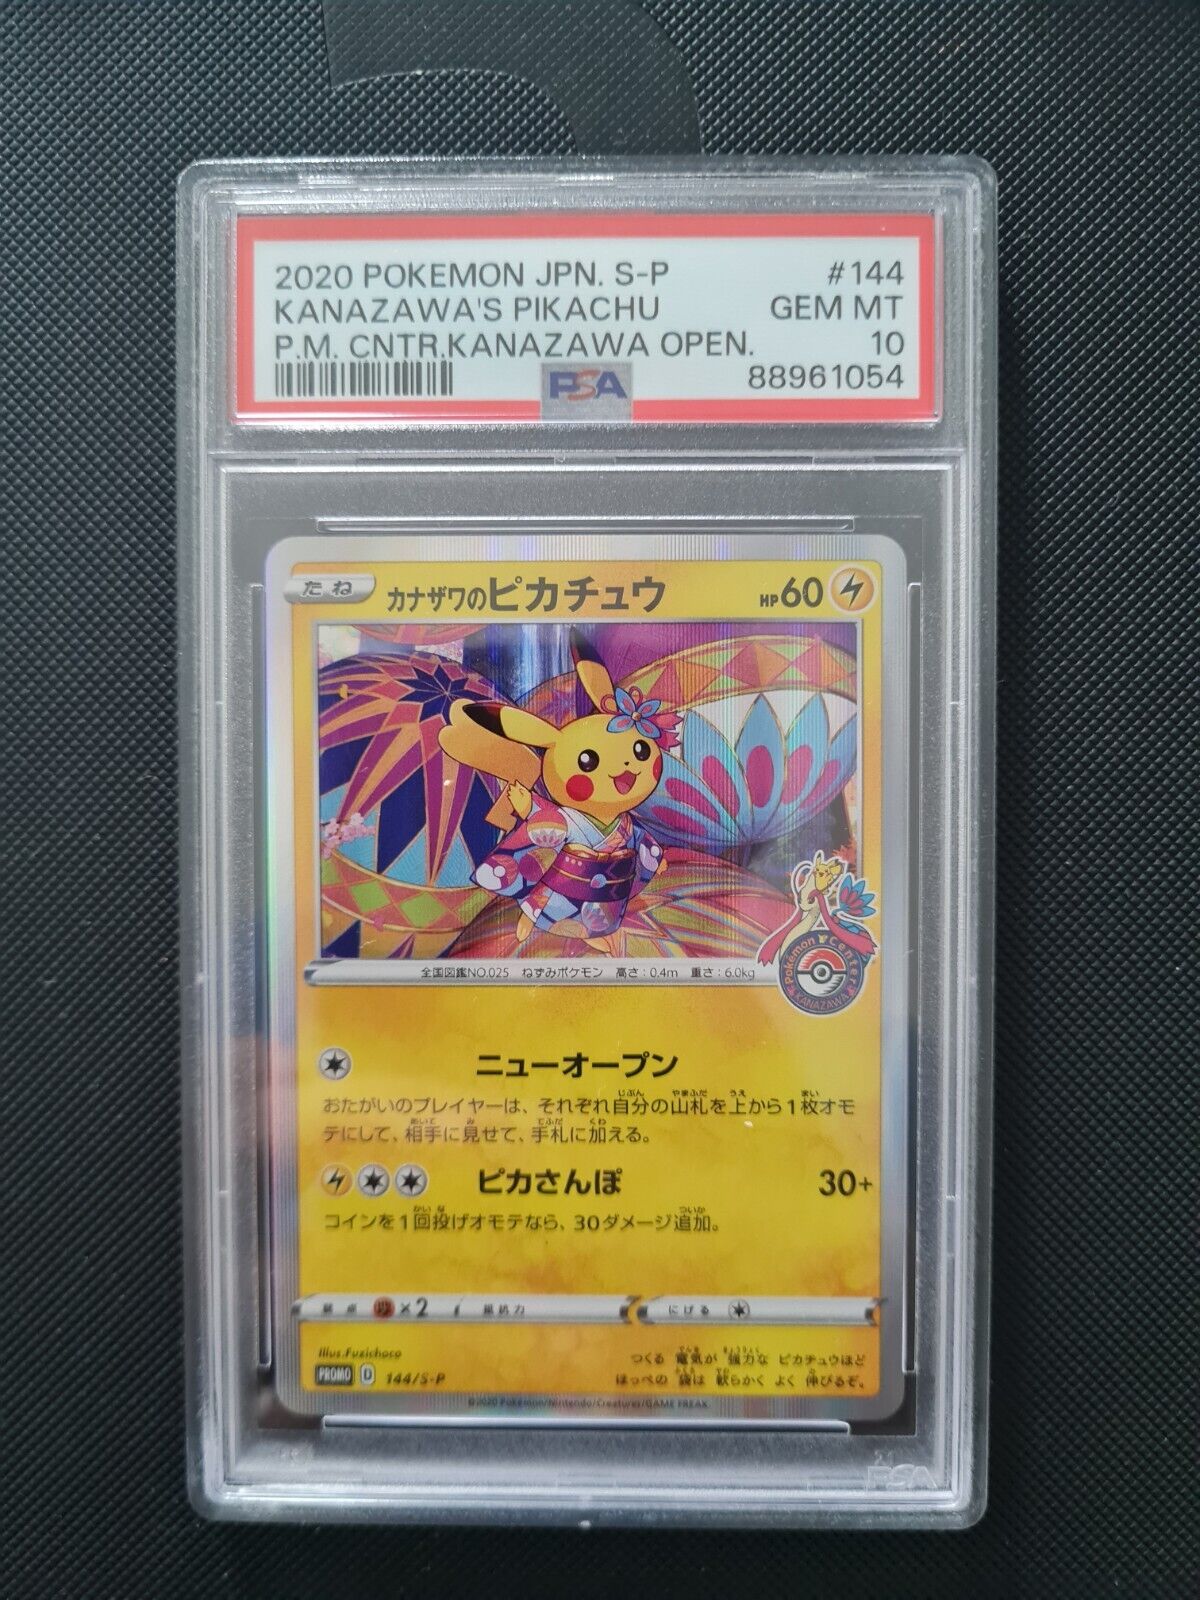 Pokemon Card - Kanazawa Pikachu 144/S-P Promo Japanese Holo Rare - PSA 10